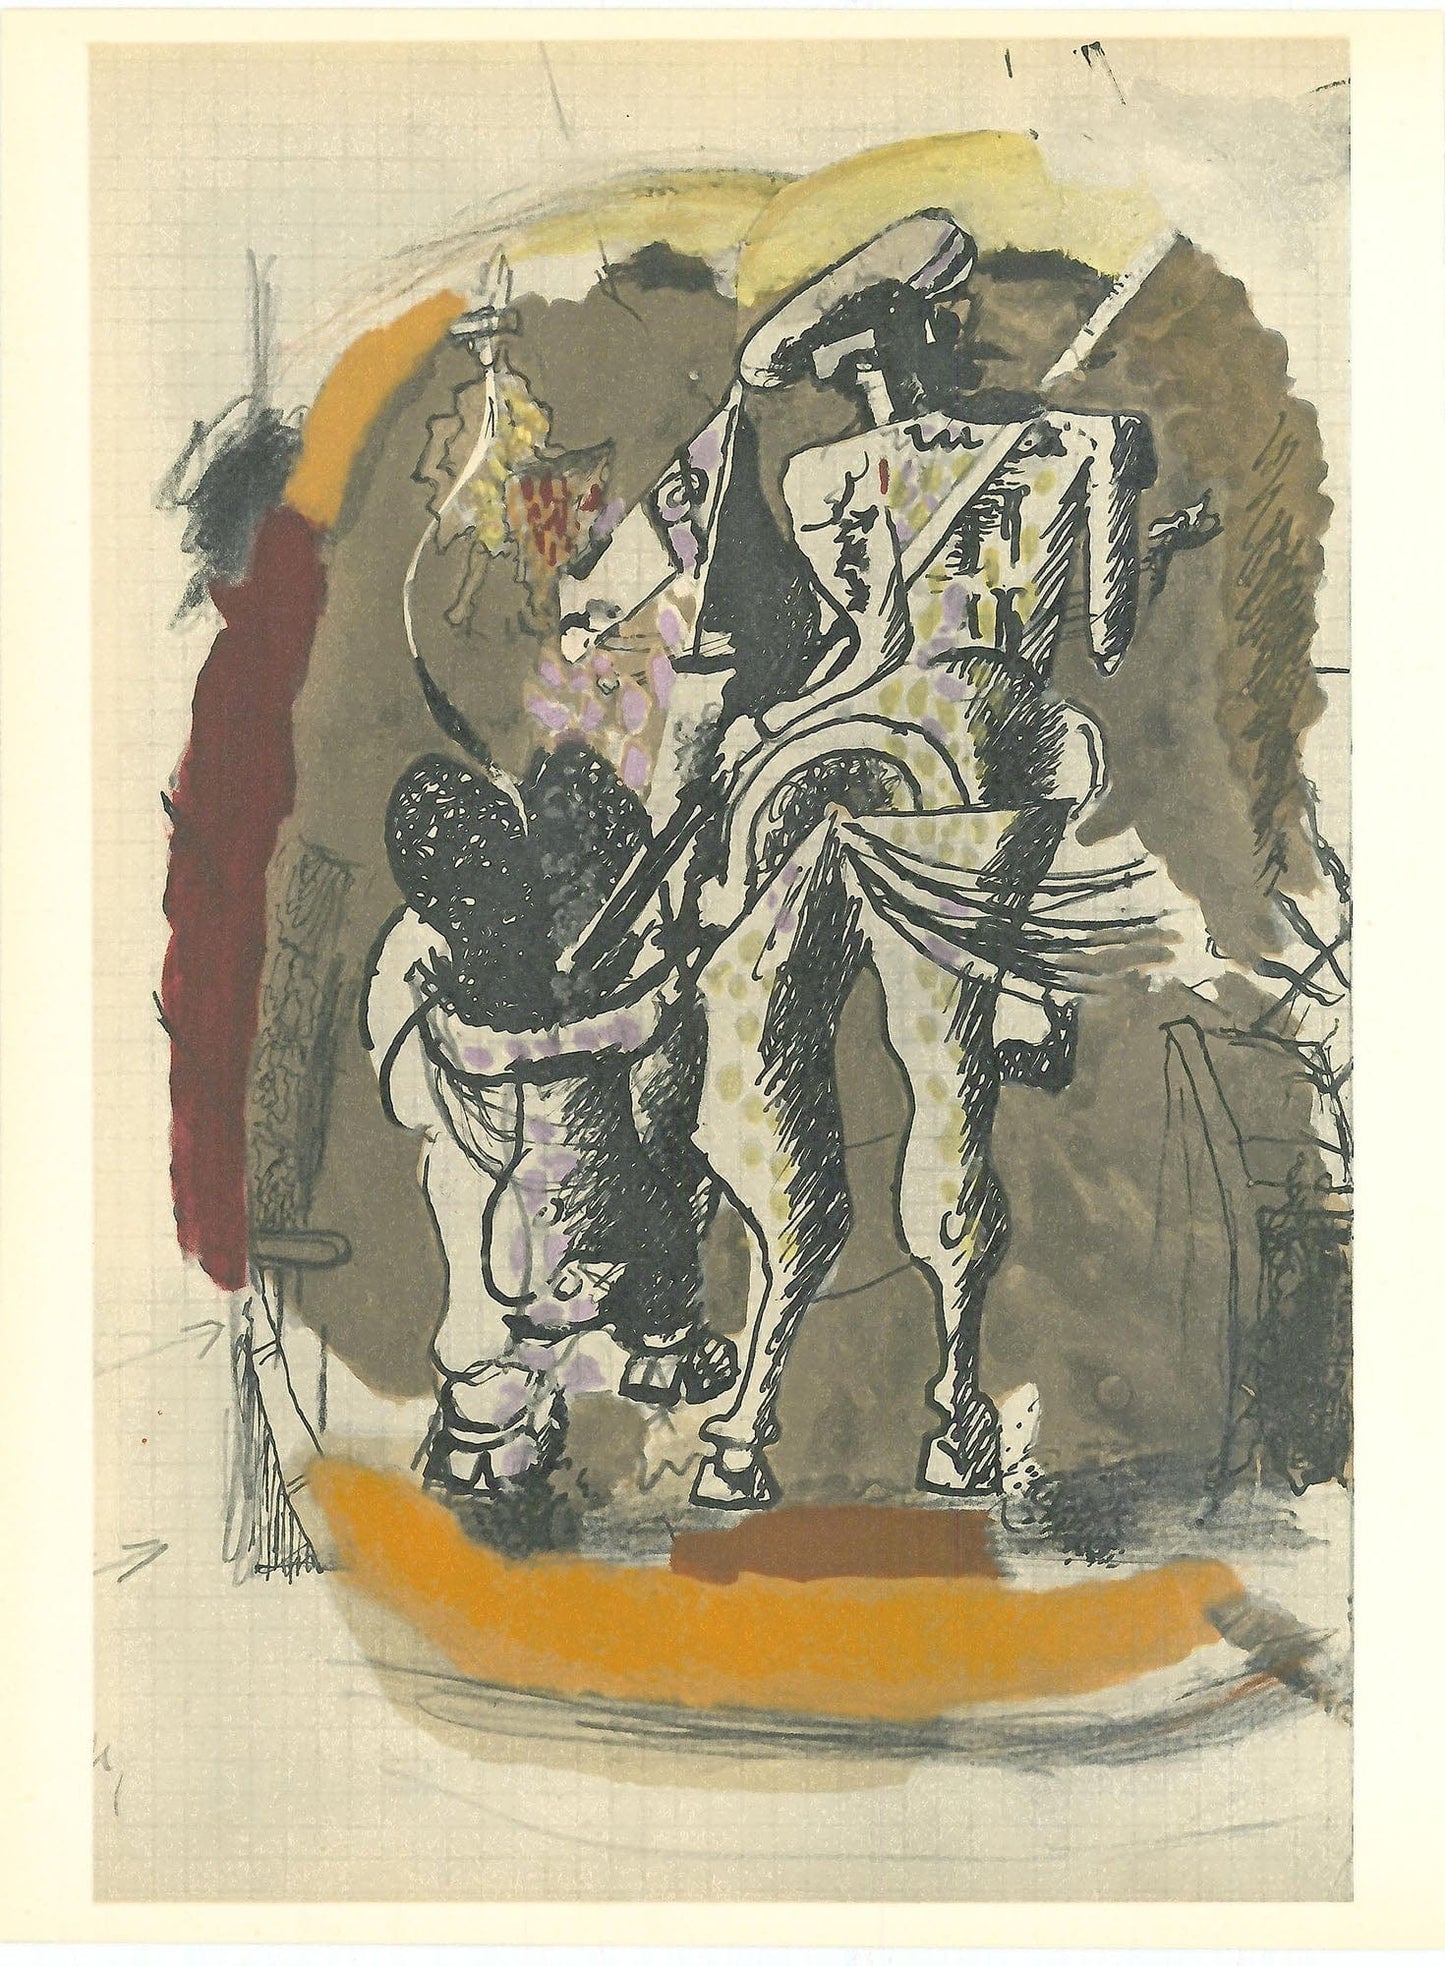 Georges Braque, "Untitled V" ZOOM Vol. 8 No. 31 ET 32 verve lithograph